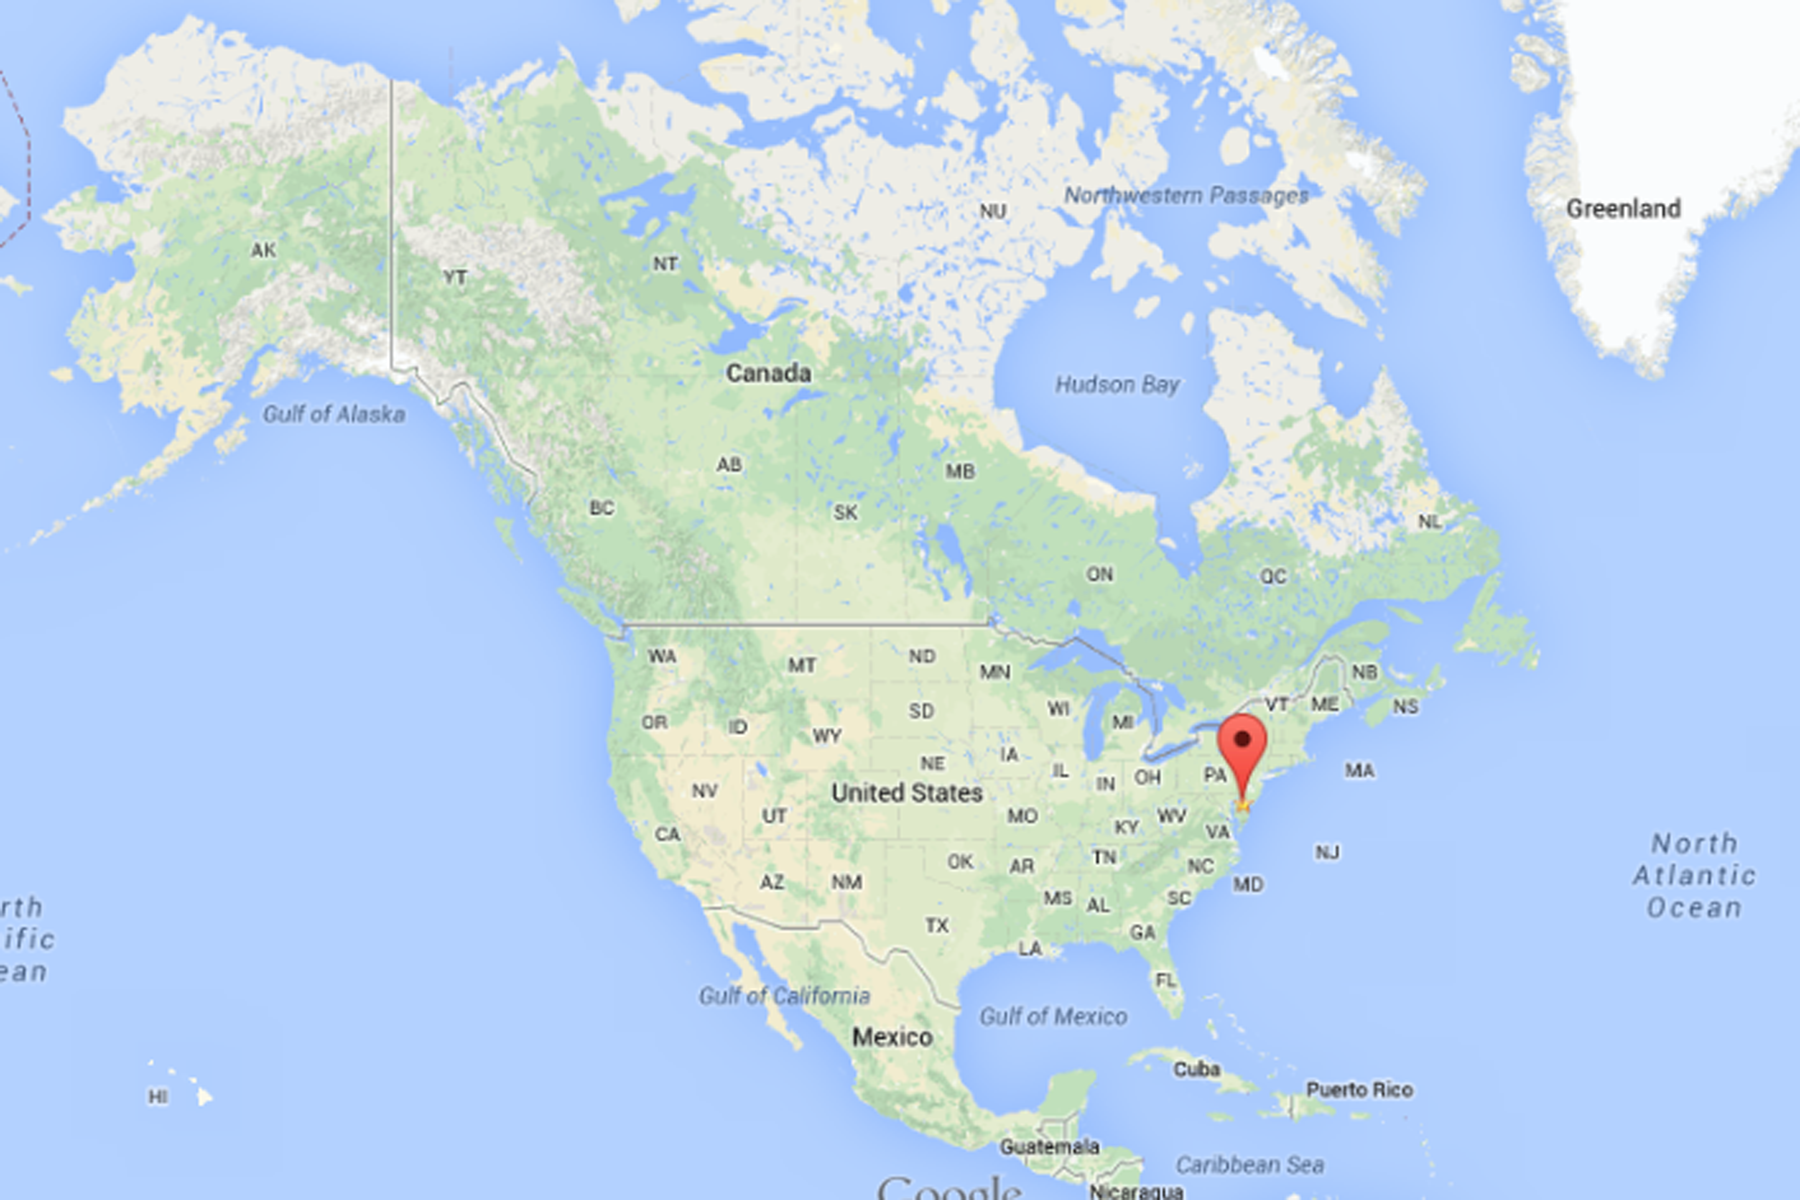 Залив фанди на карте Северной Америки. Залив фанди на карте Северной Америки 7. Залив фанди на карте Северной Америки контурная карта.